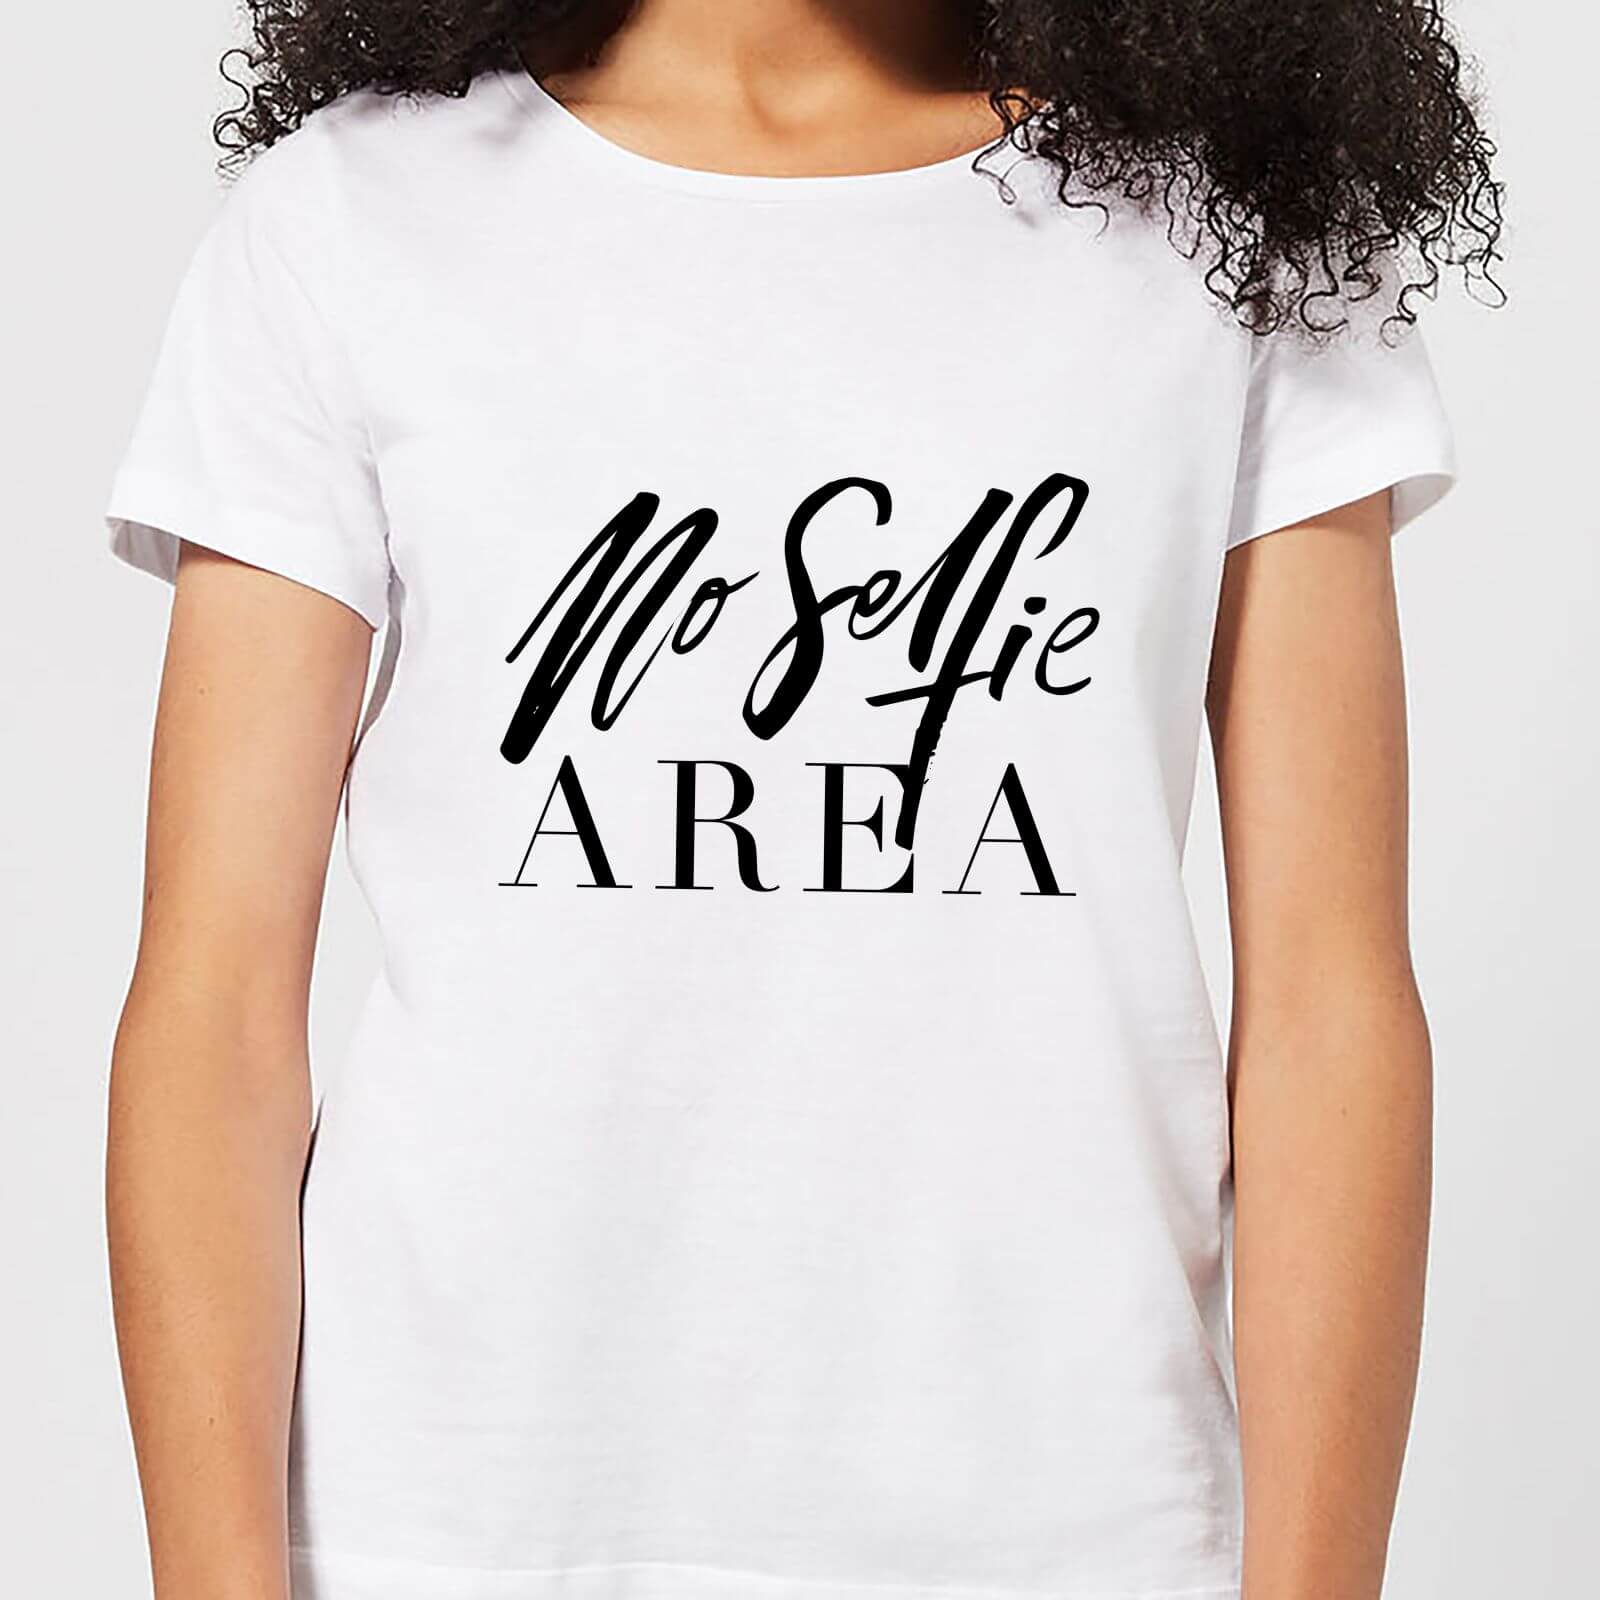 No Selfie Area Women's T-Shirt - White - S - White